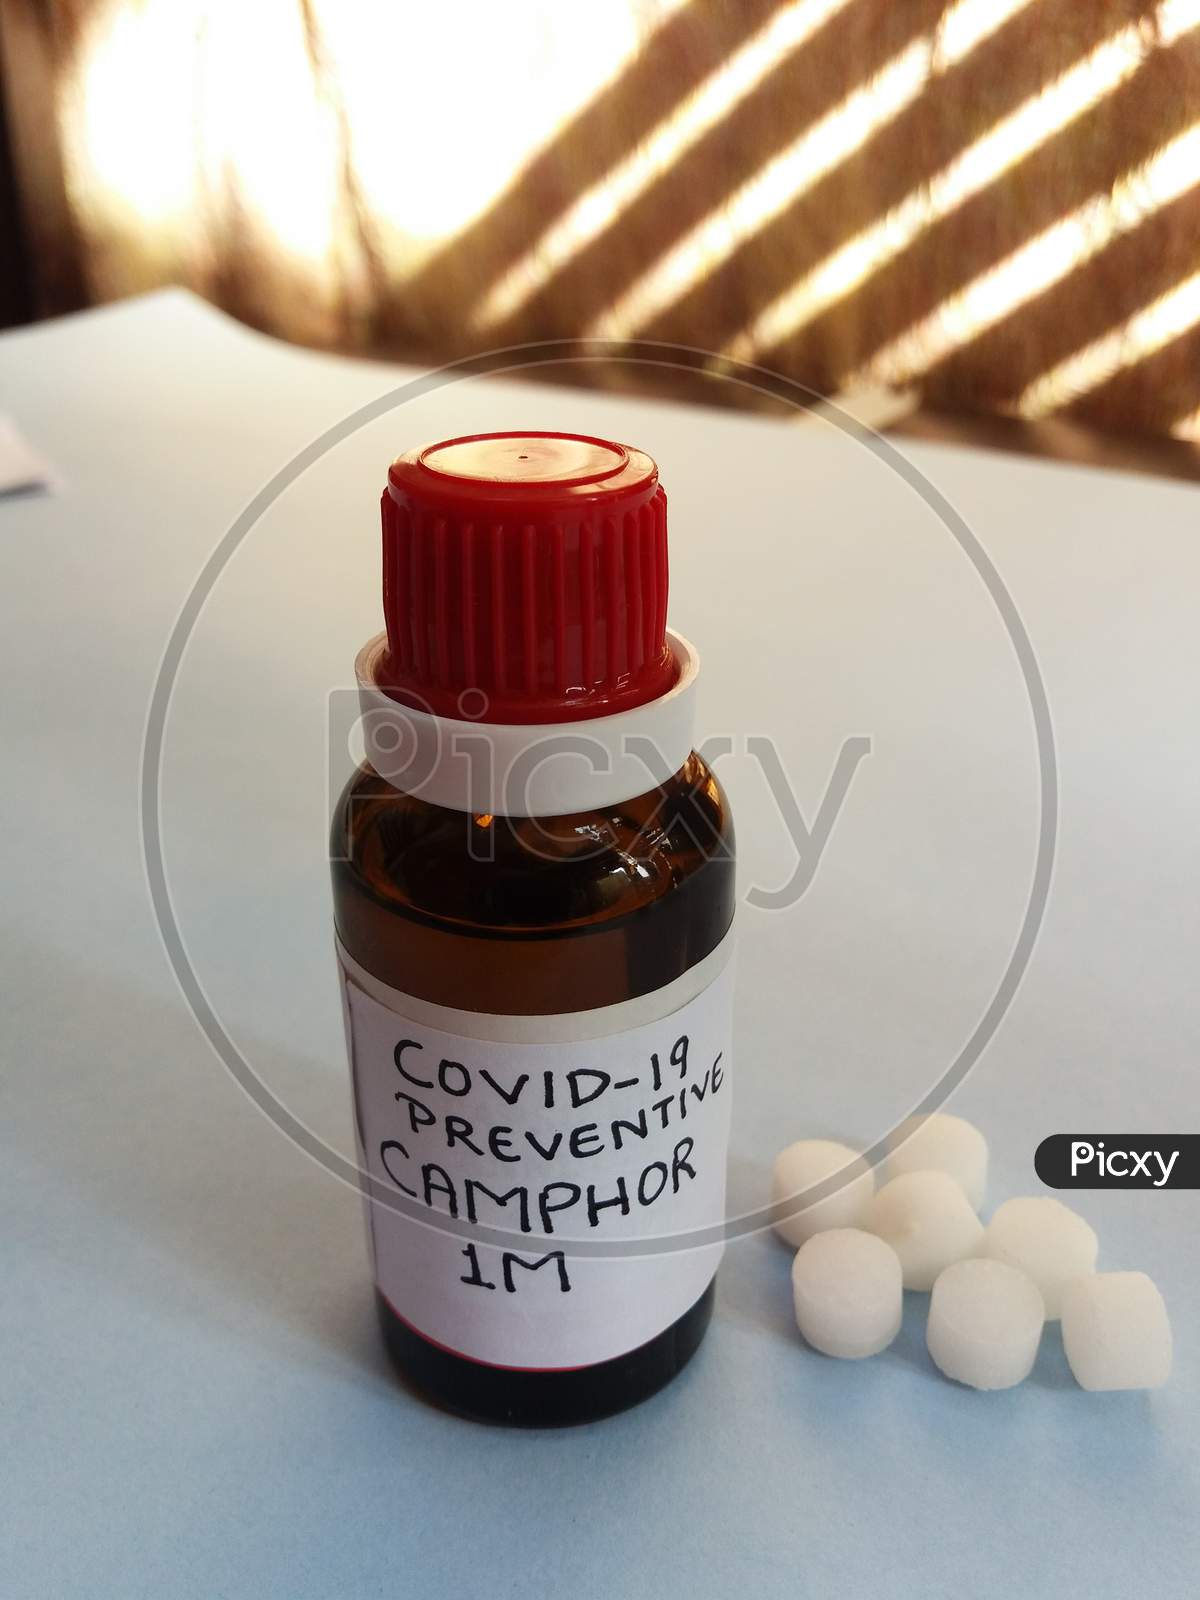 homeopathy medicine camphora 1m used to boost immunity during coronavirus outbreak